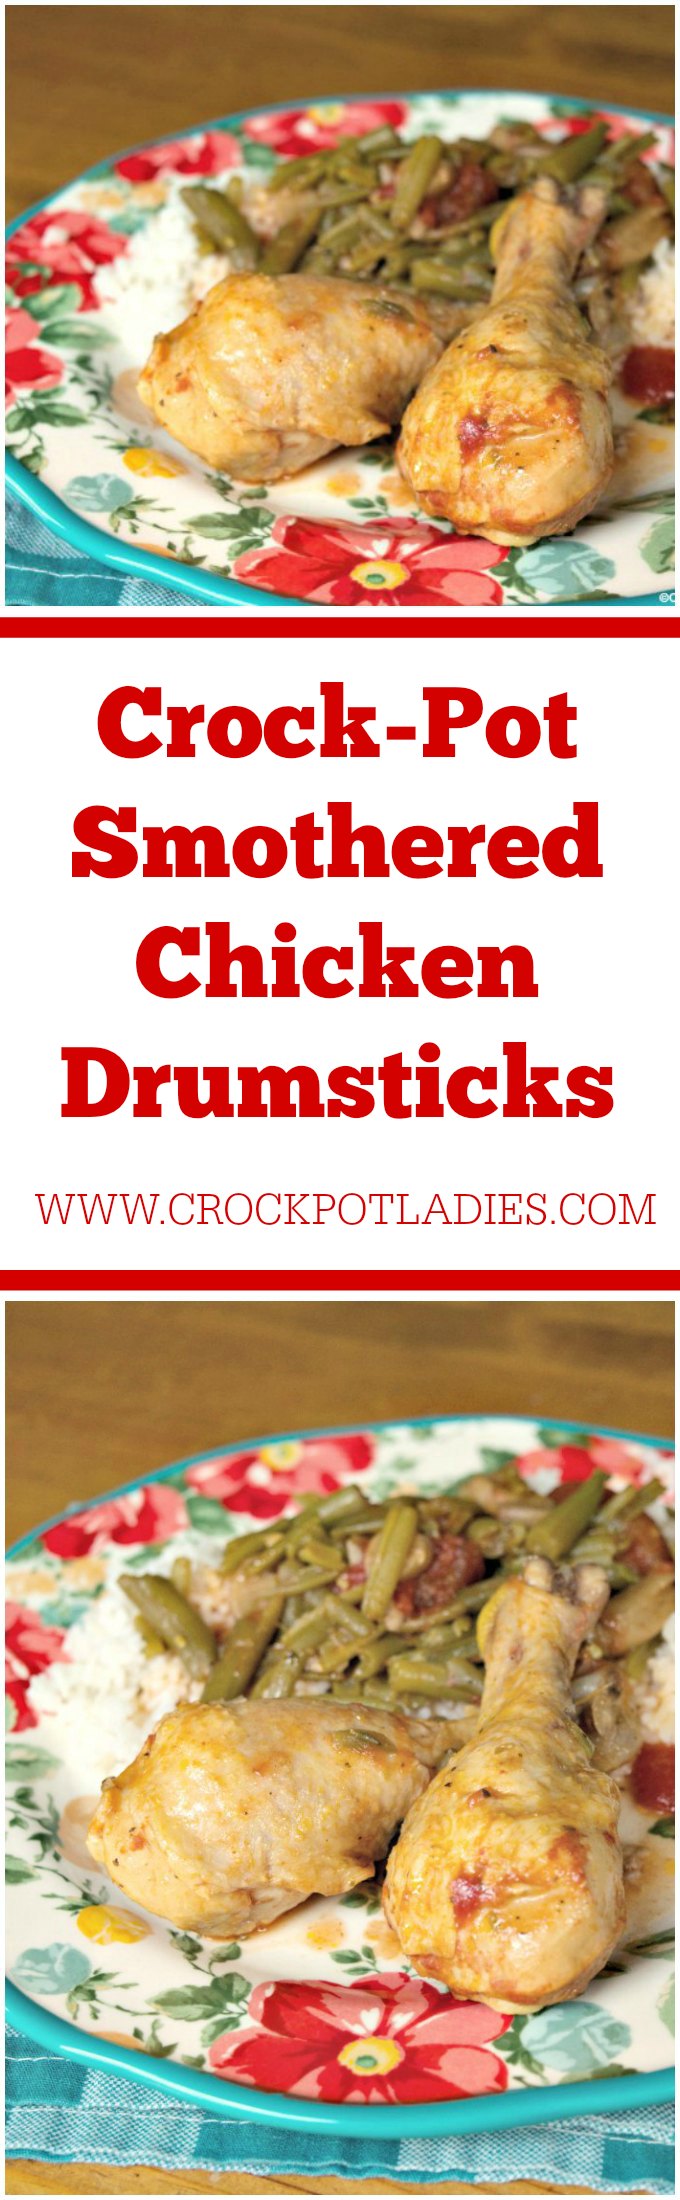 Crock-Pot Smothered Chicken Drumsticks